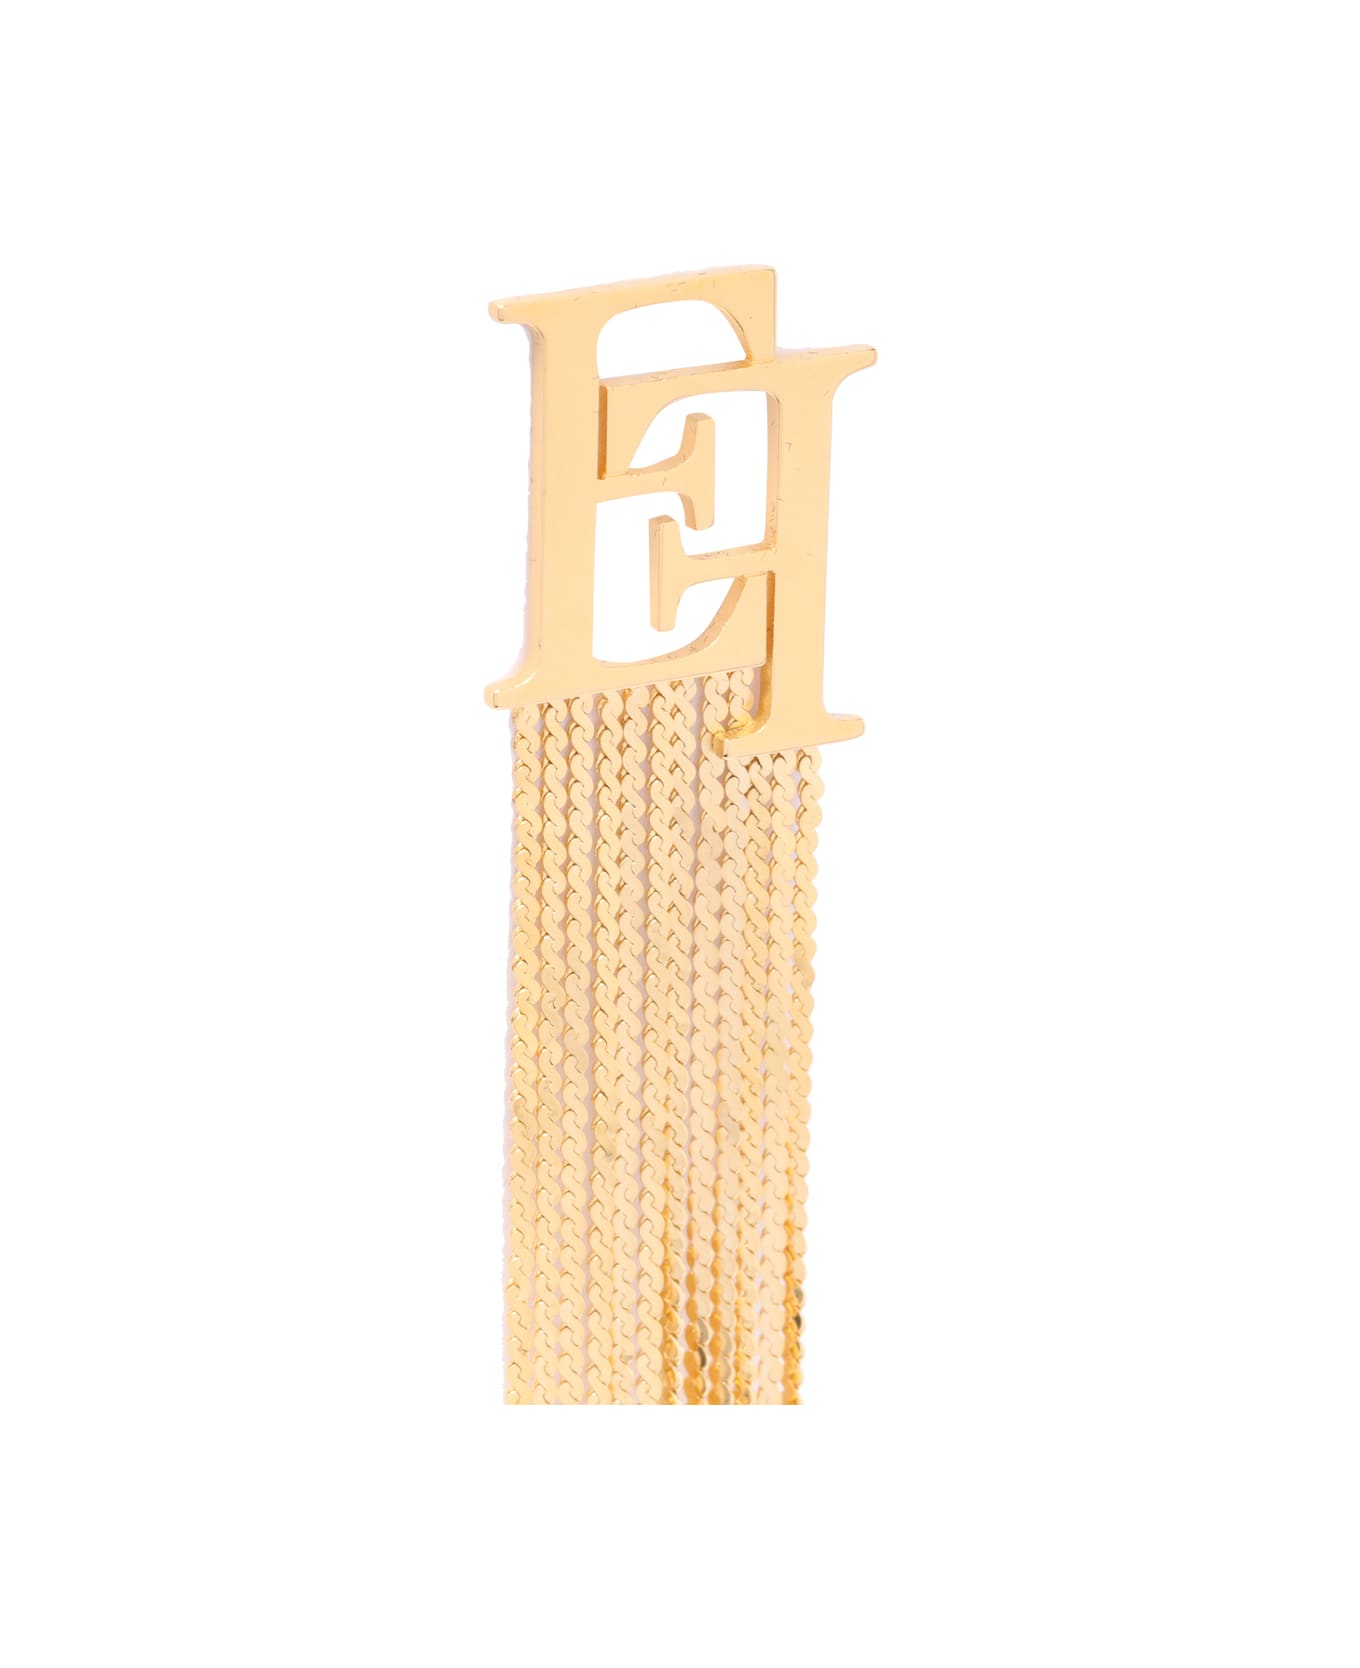 Elisabetta Franchi Logo Earrings - Golden